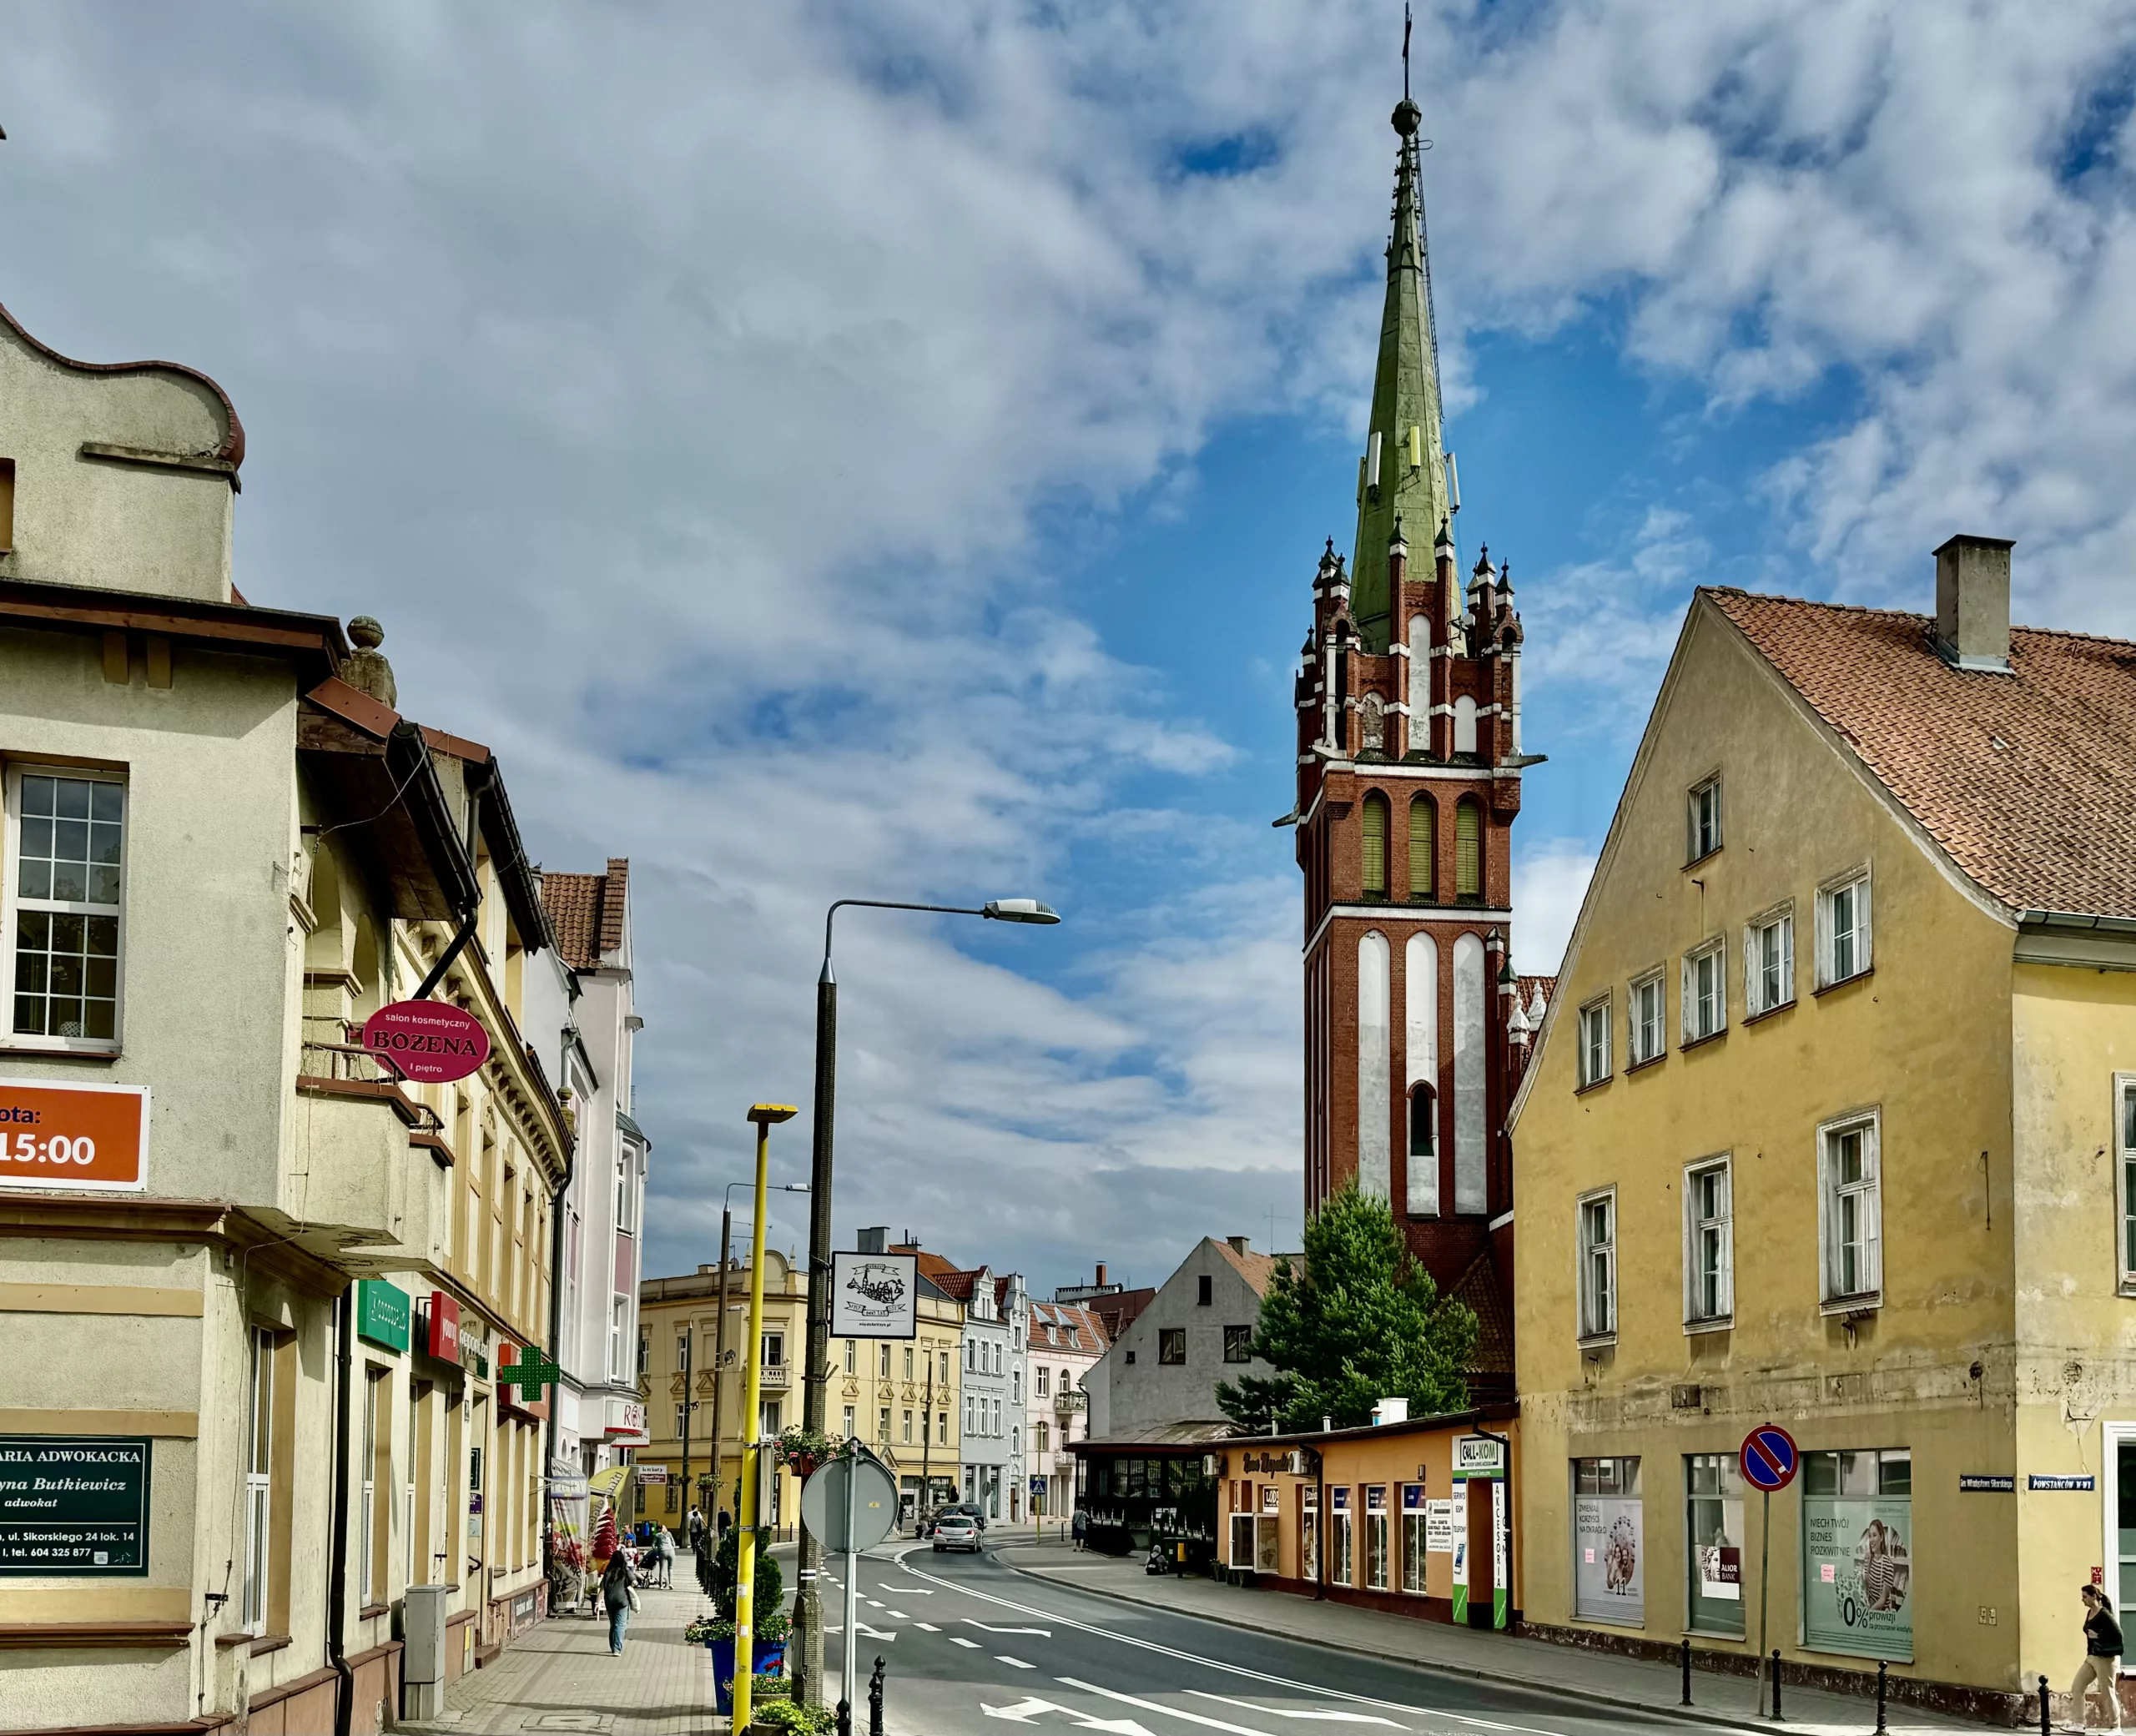 Kętrzyn(Rastenburg), Poland